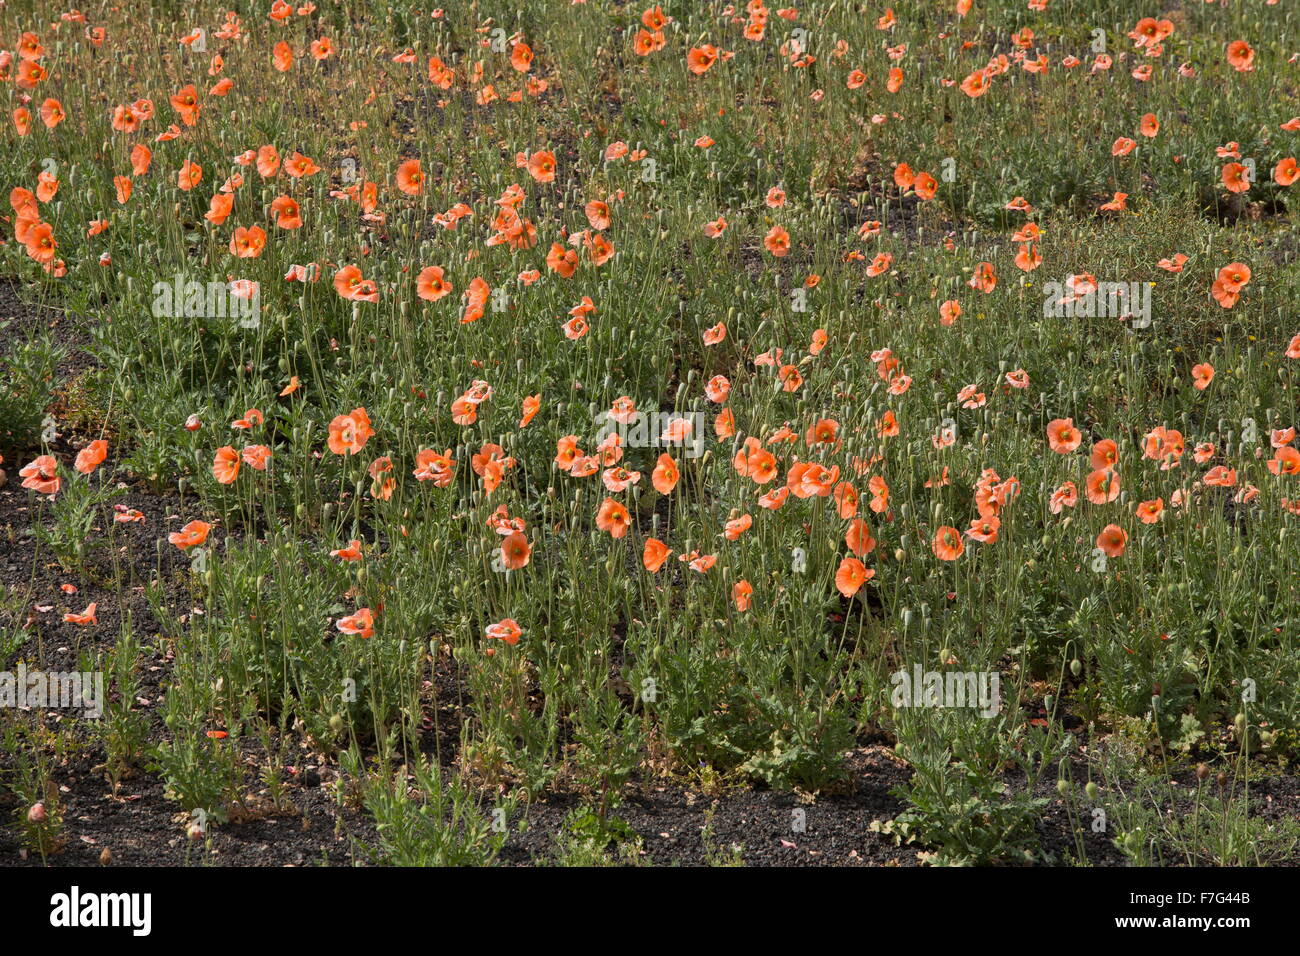 Long-headed poppy, Papaver dubium en masse. Stock Photo